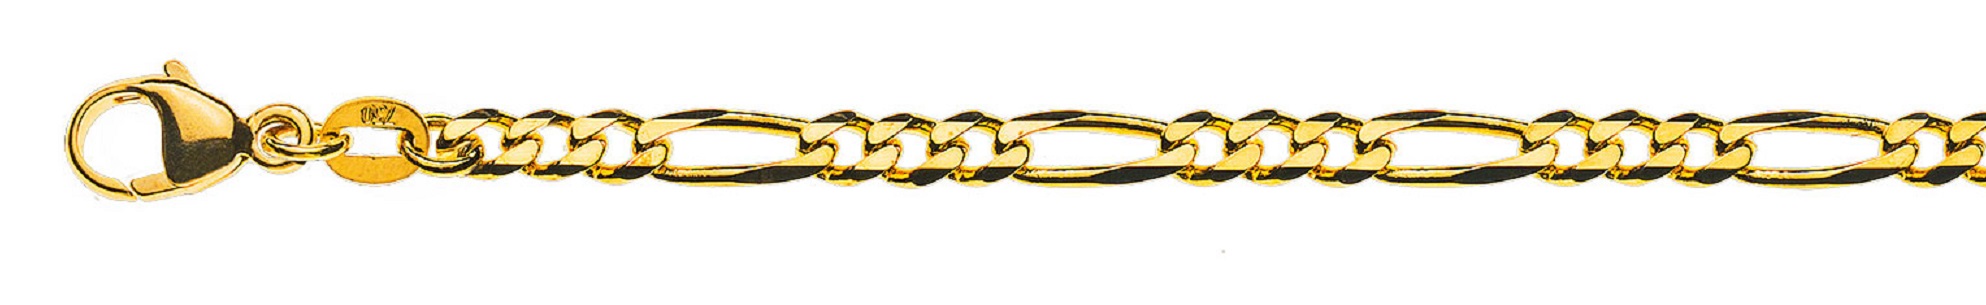 AURONOS Prestige Halskette Gelbgold 18K Figarokette 45cm 3.4mm